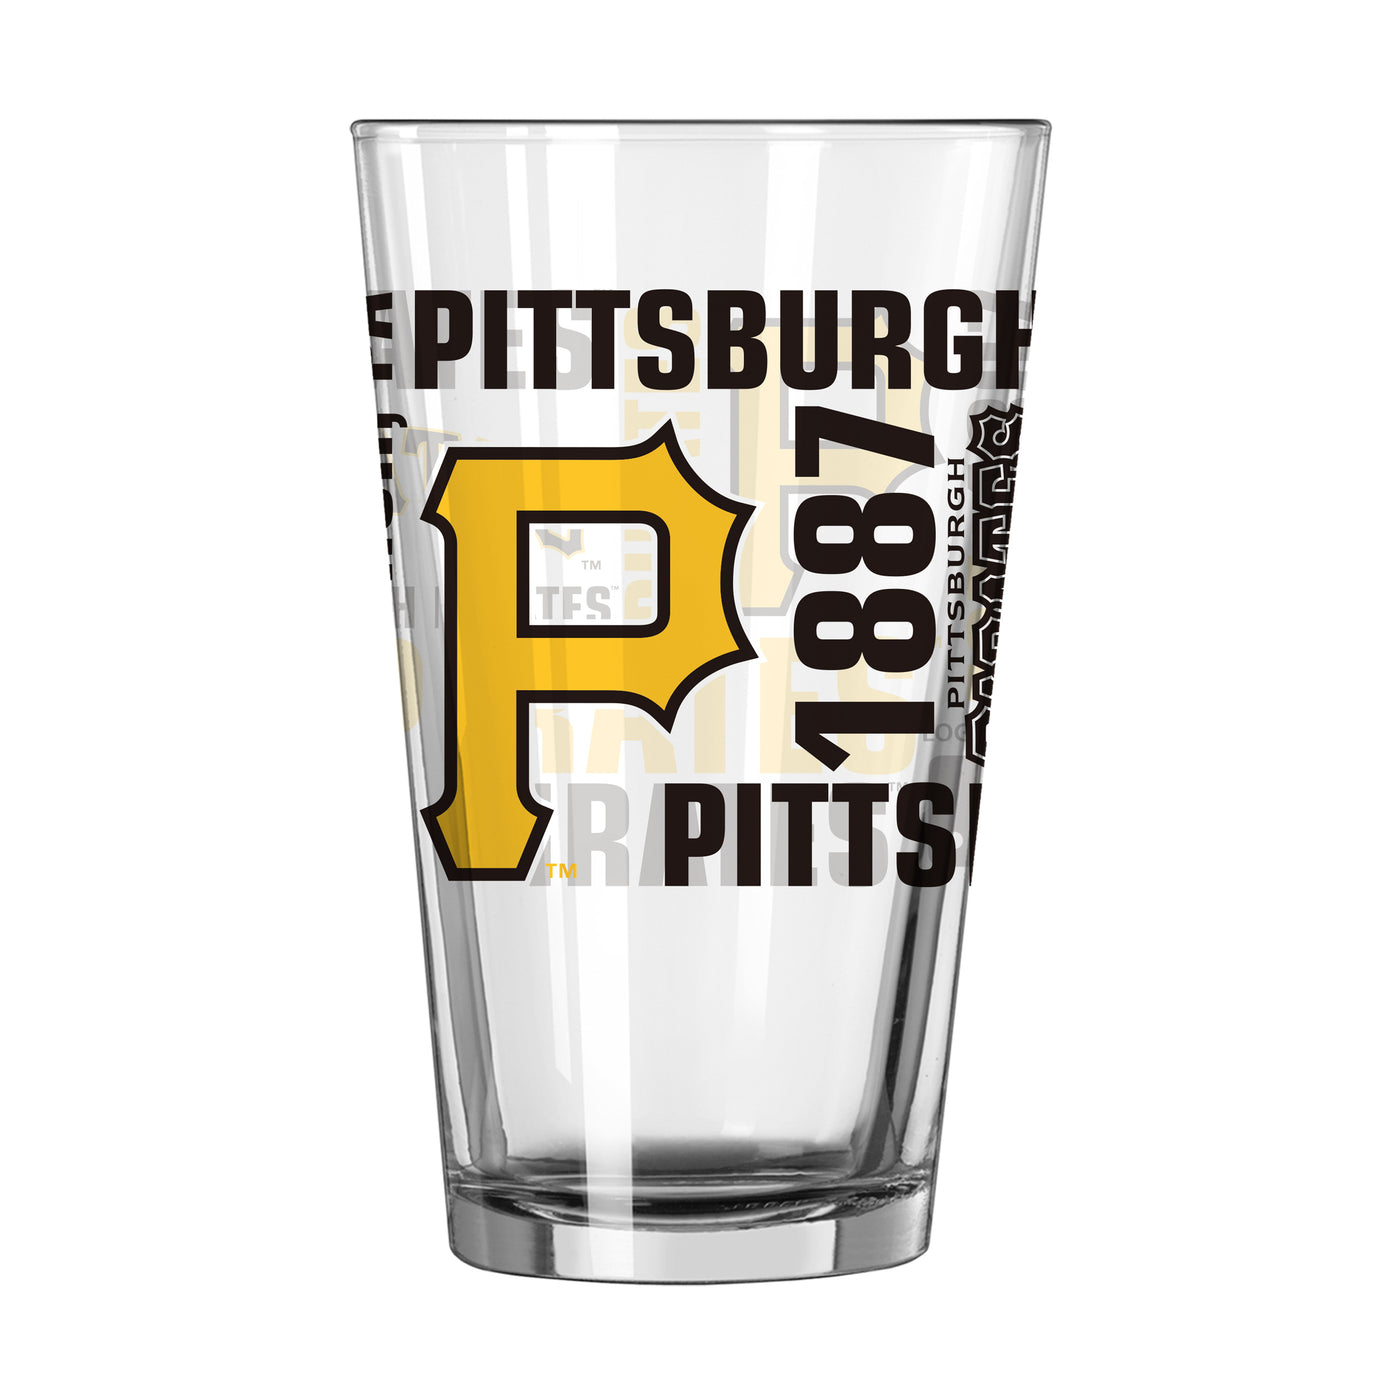 Pittsburgh Pirates 16oz Spirit Pint Glass